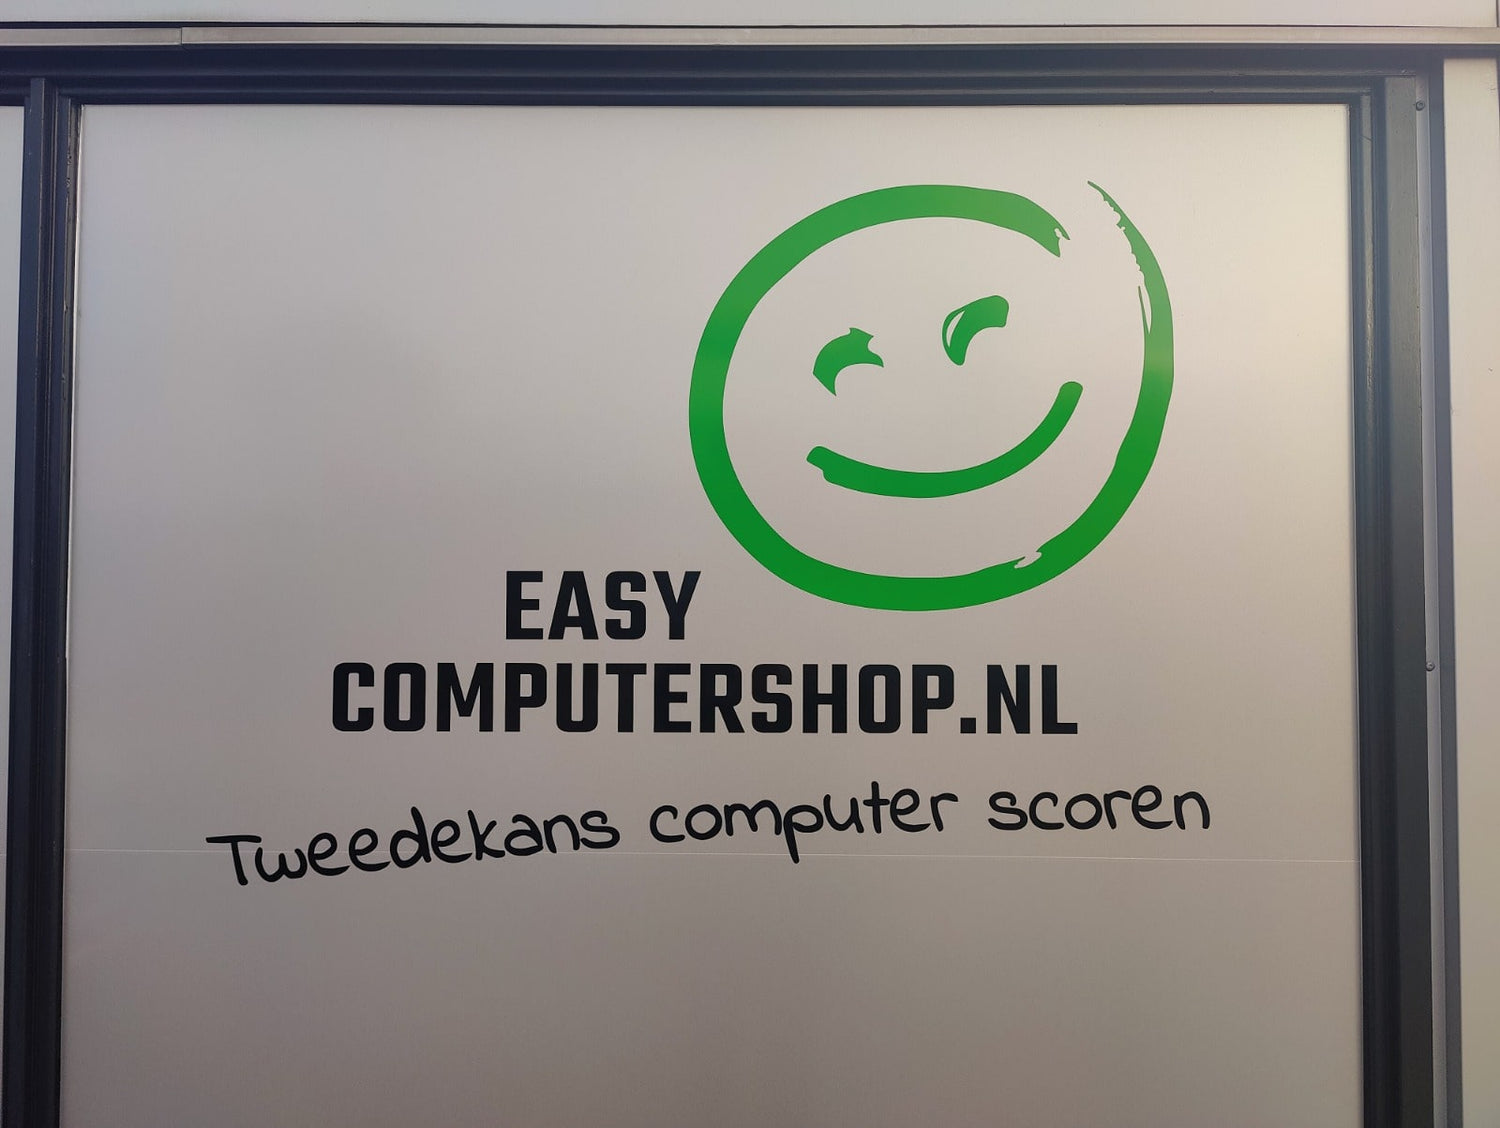 Raam waar Easy computershop met op staat met het slogan van easycomputershop.nl